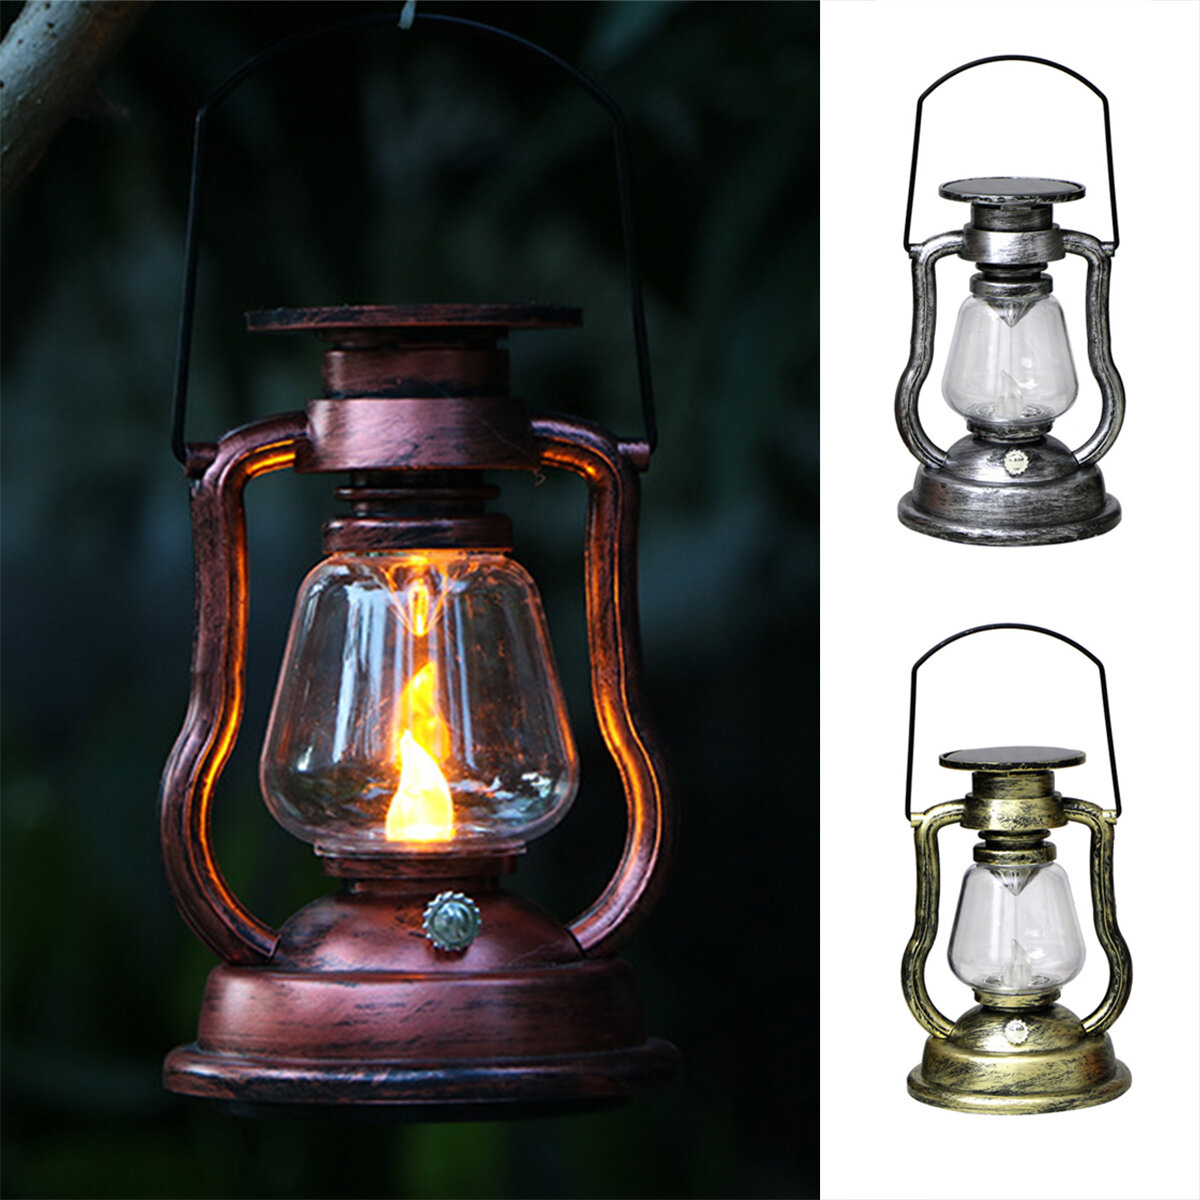 Retro Antique Vintage Rustic Lantern Lamp Wall Sconce Light Fixture Outdoor Lamp